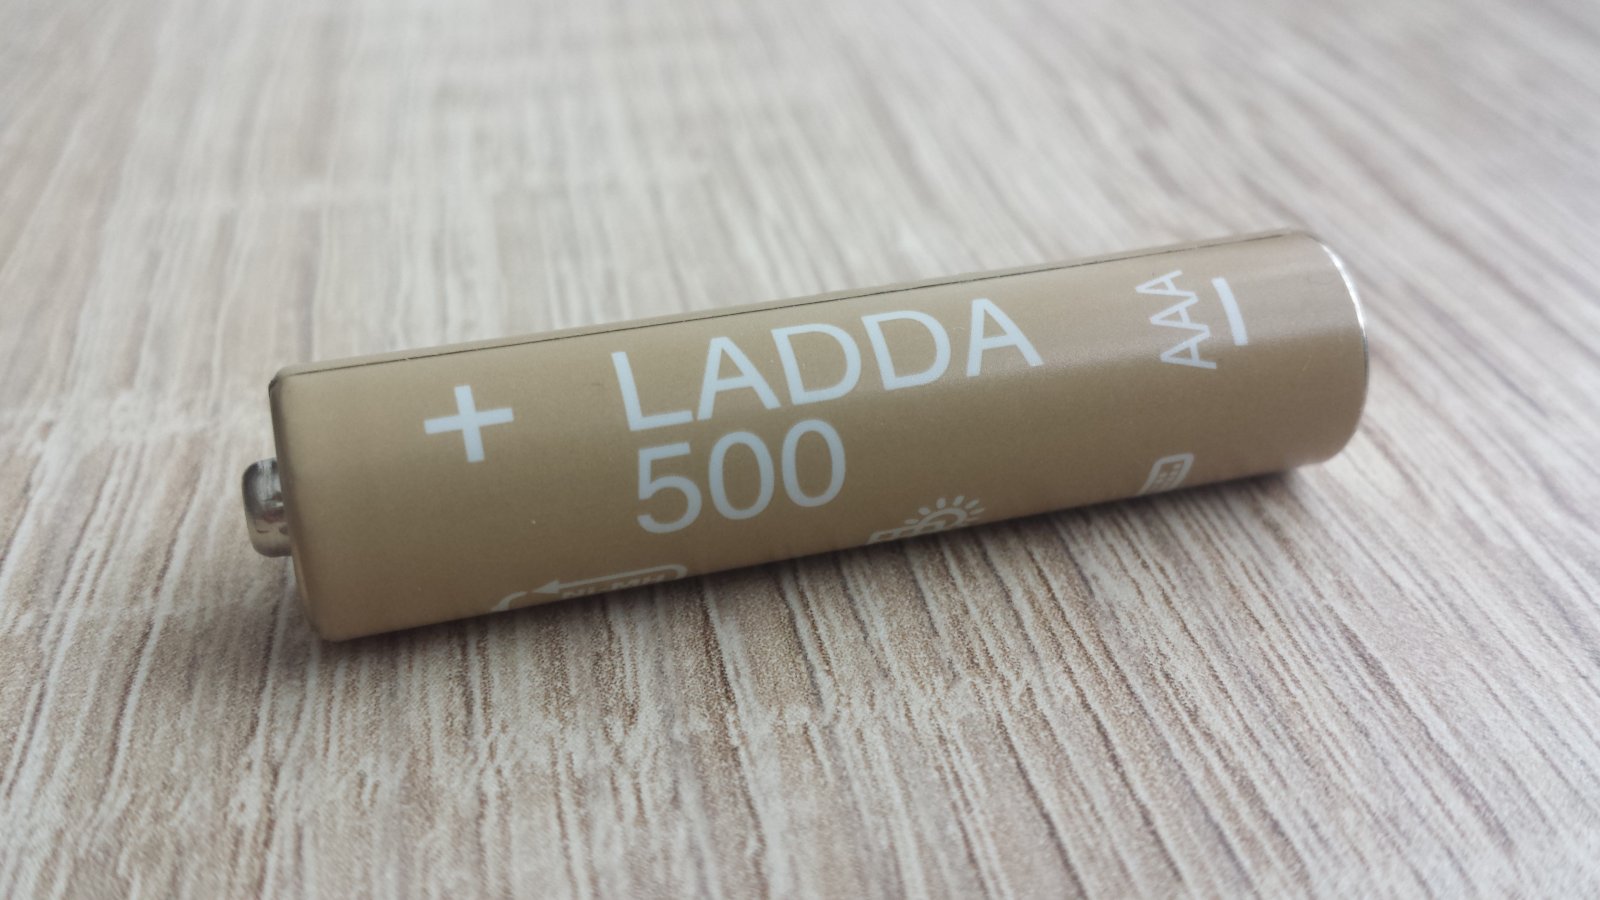 IKEA LADDA 500